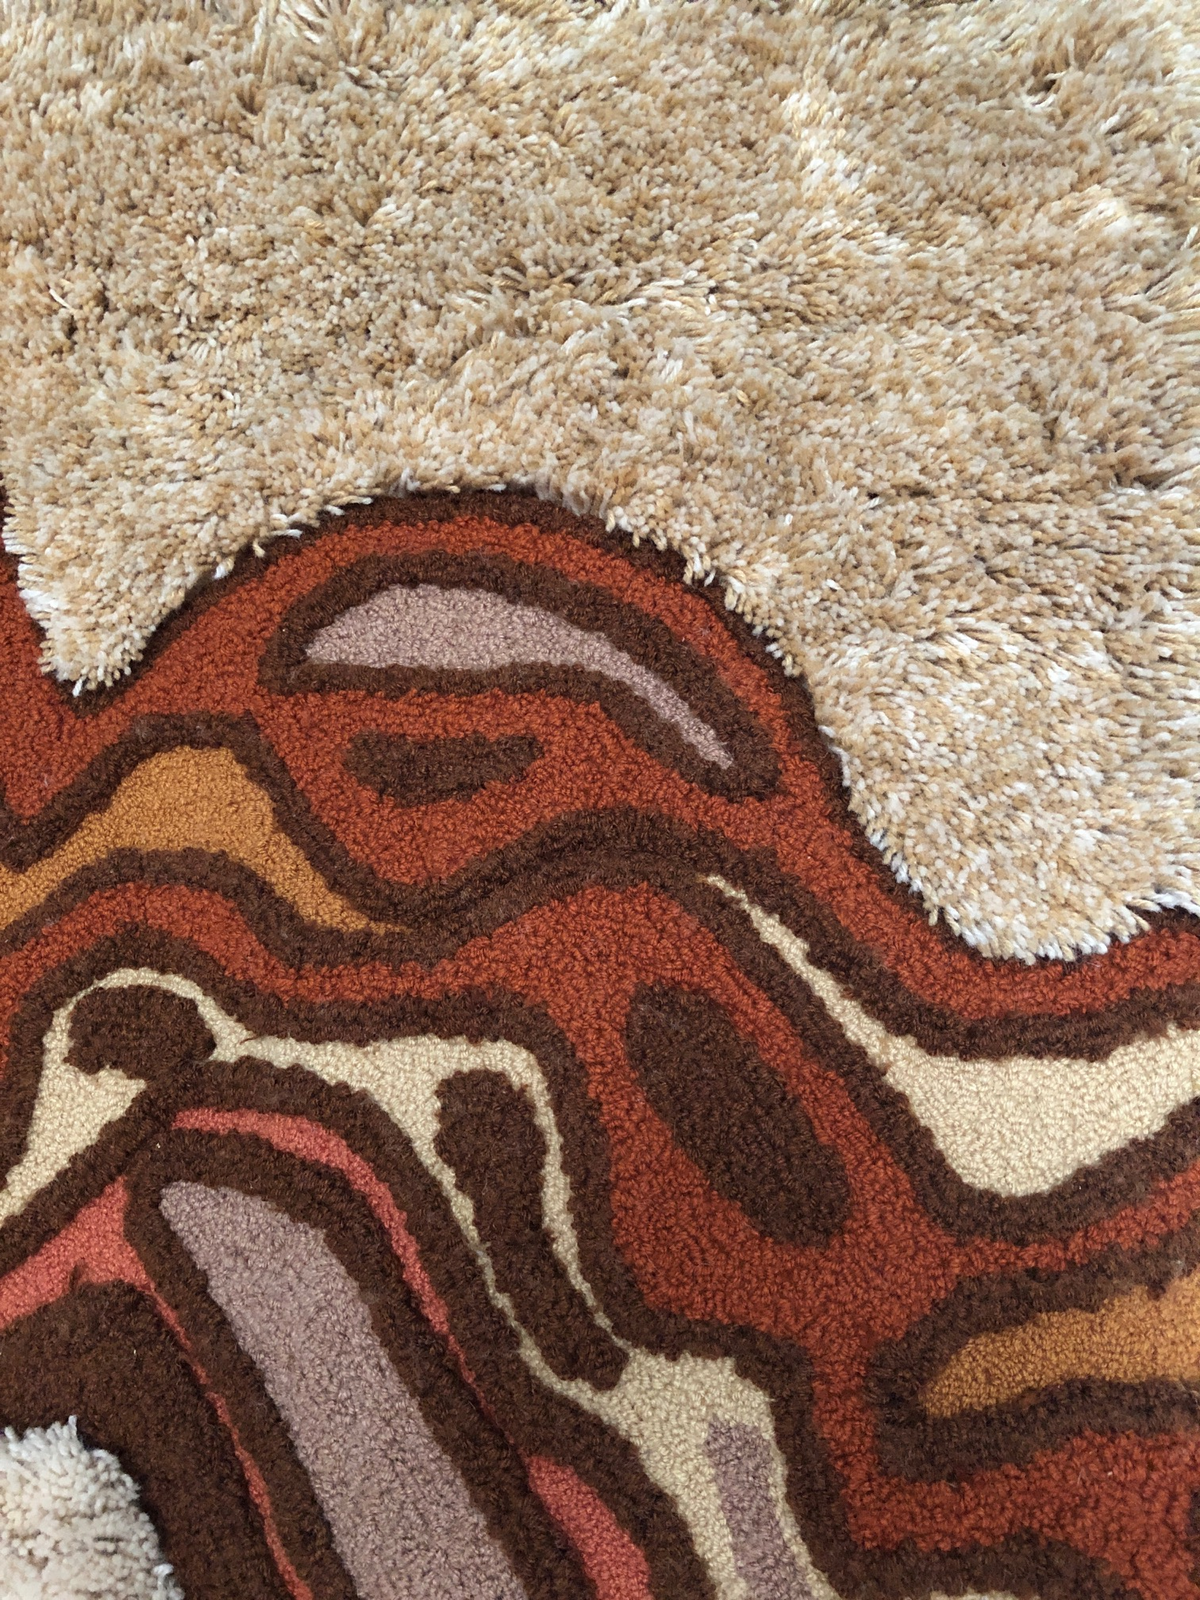 Cabin Craft rug detail